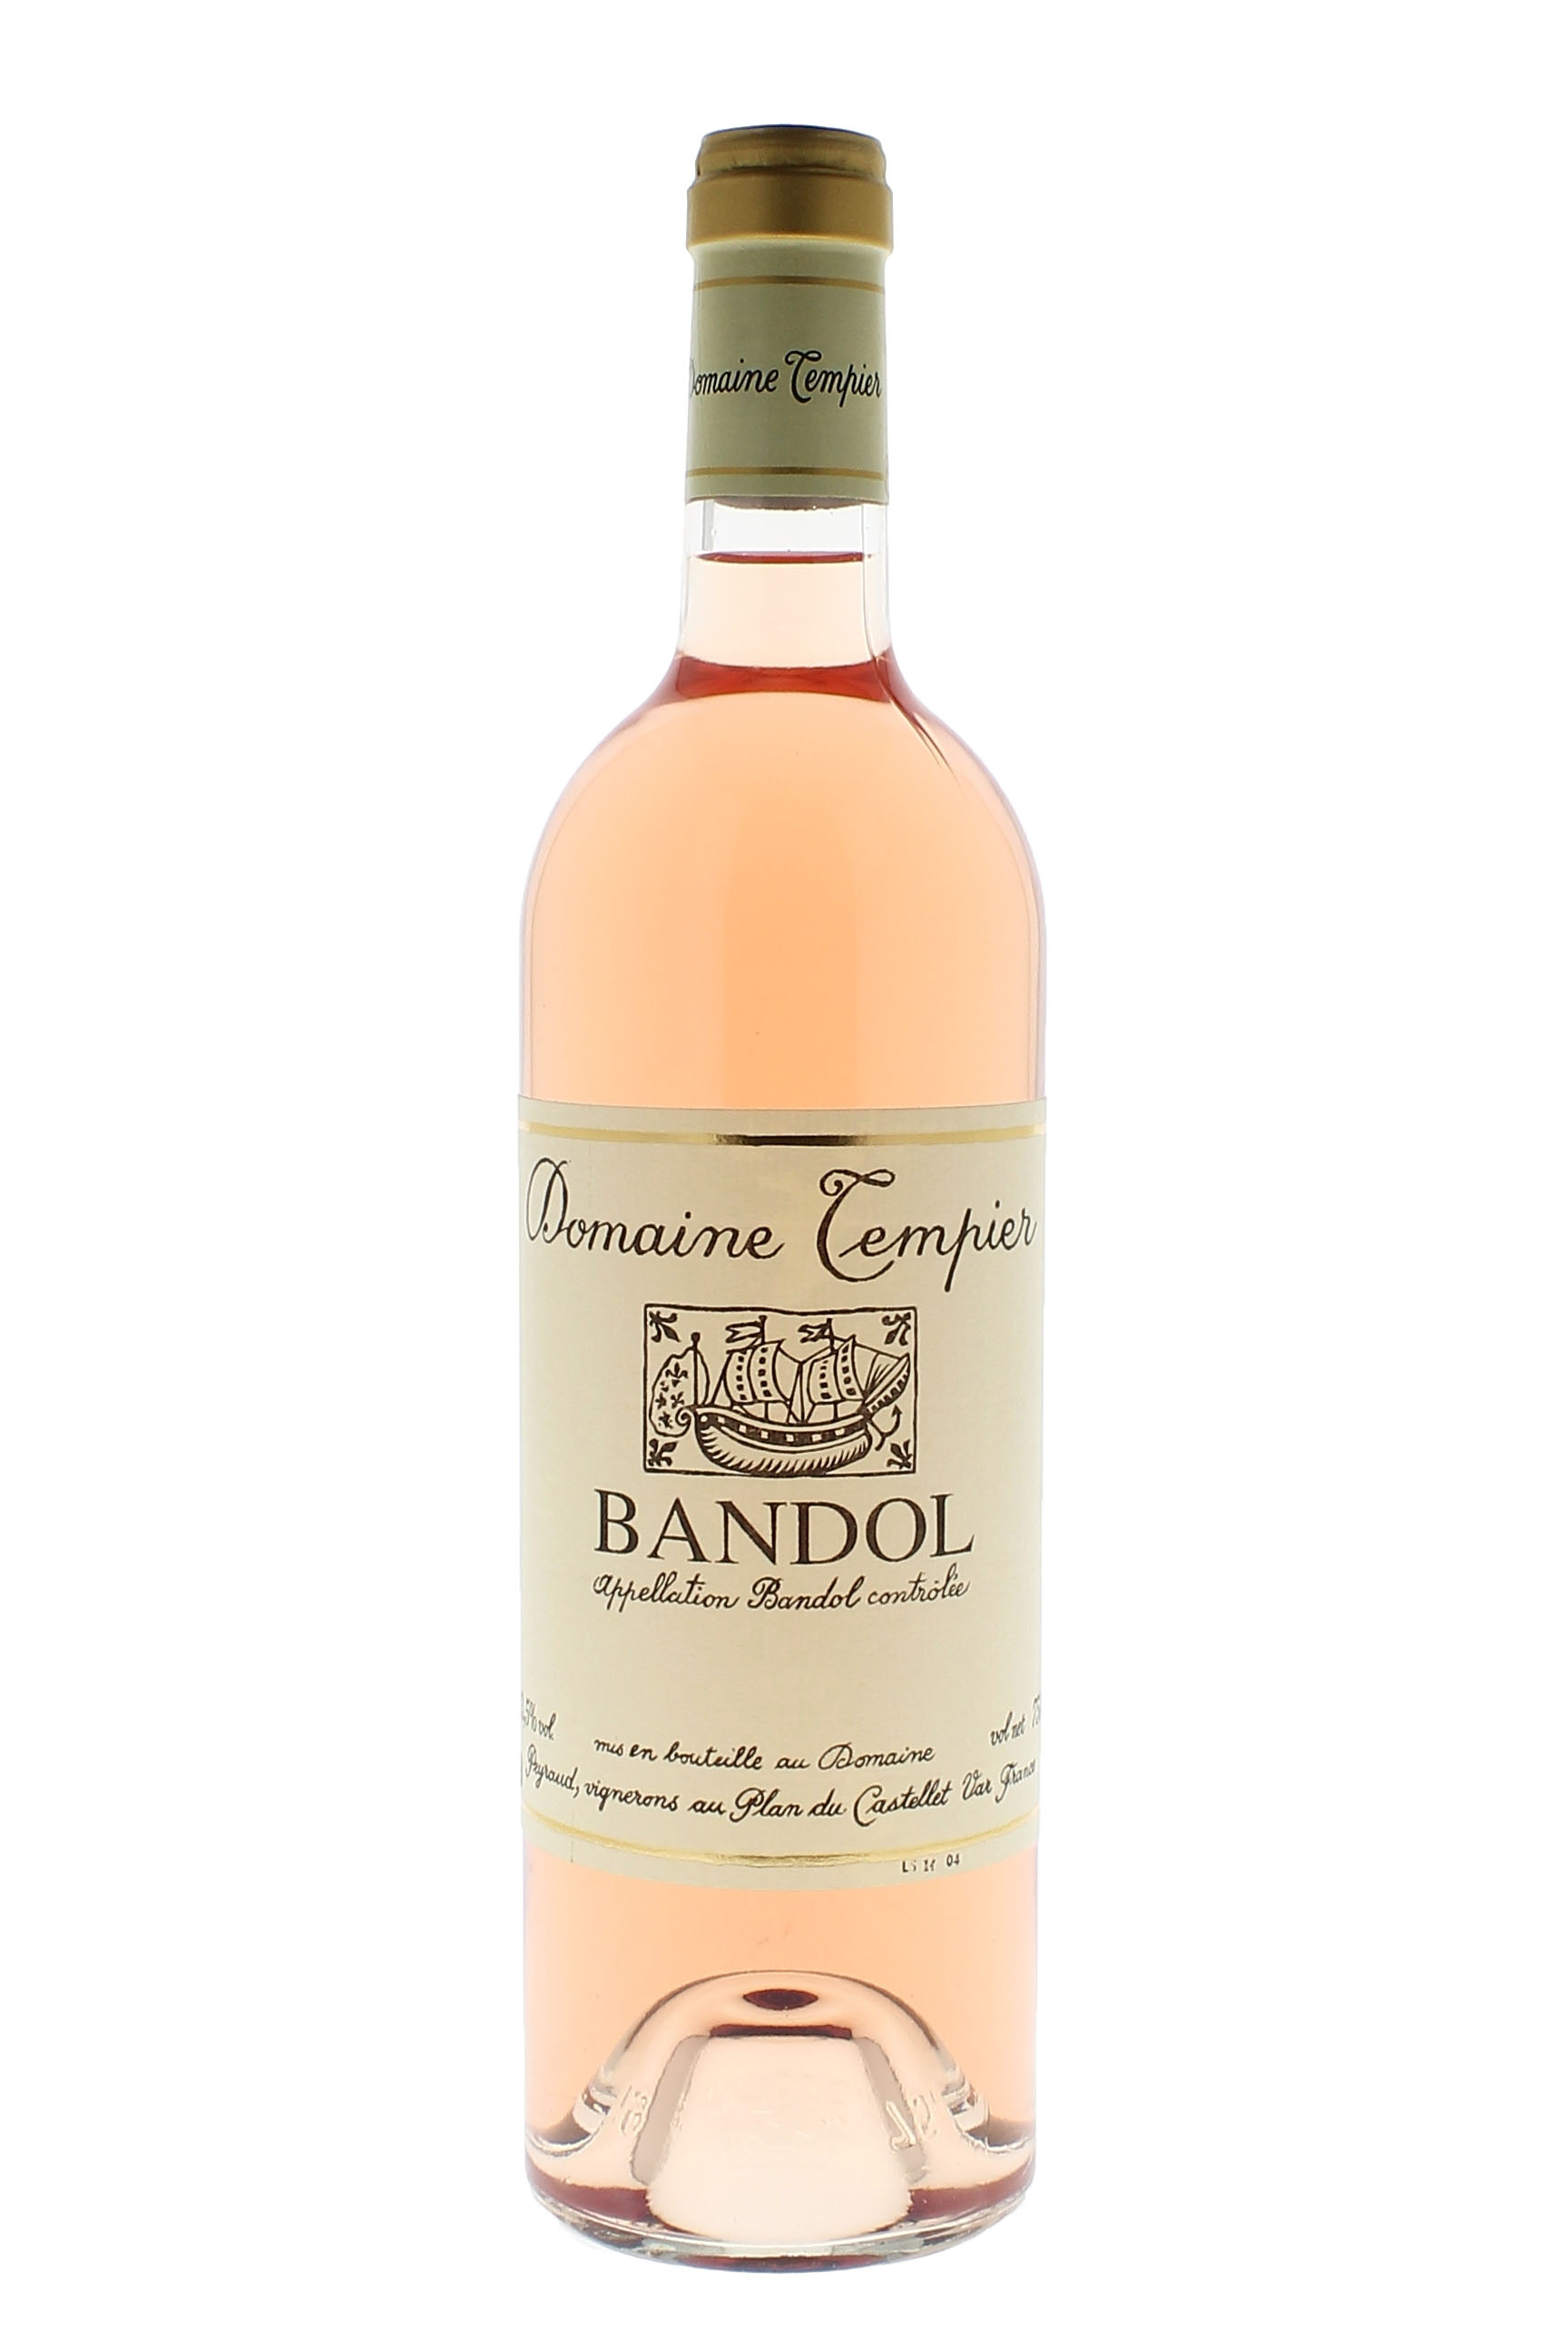 Bandol domaine tempier ros 2018  Bandol, Slection provence blanc